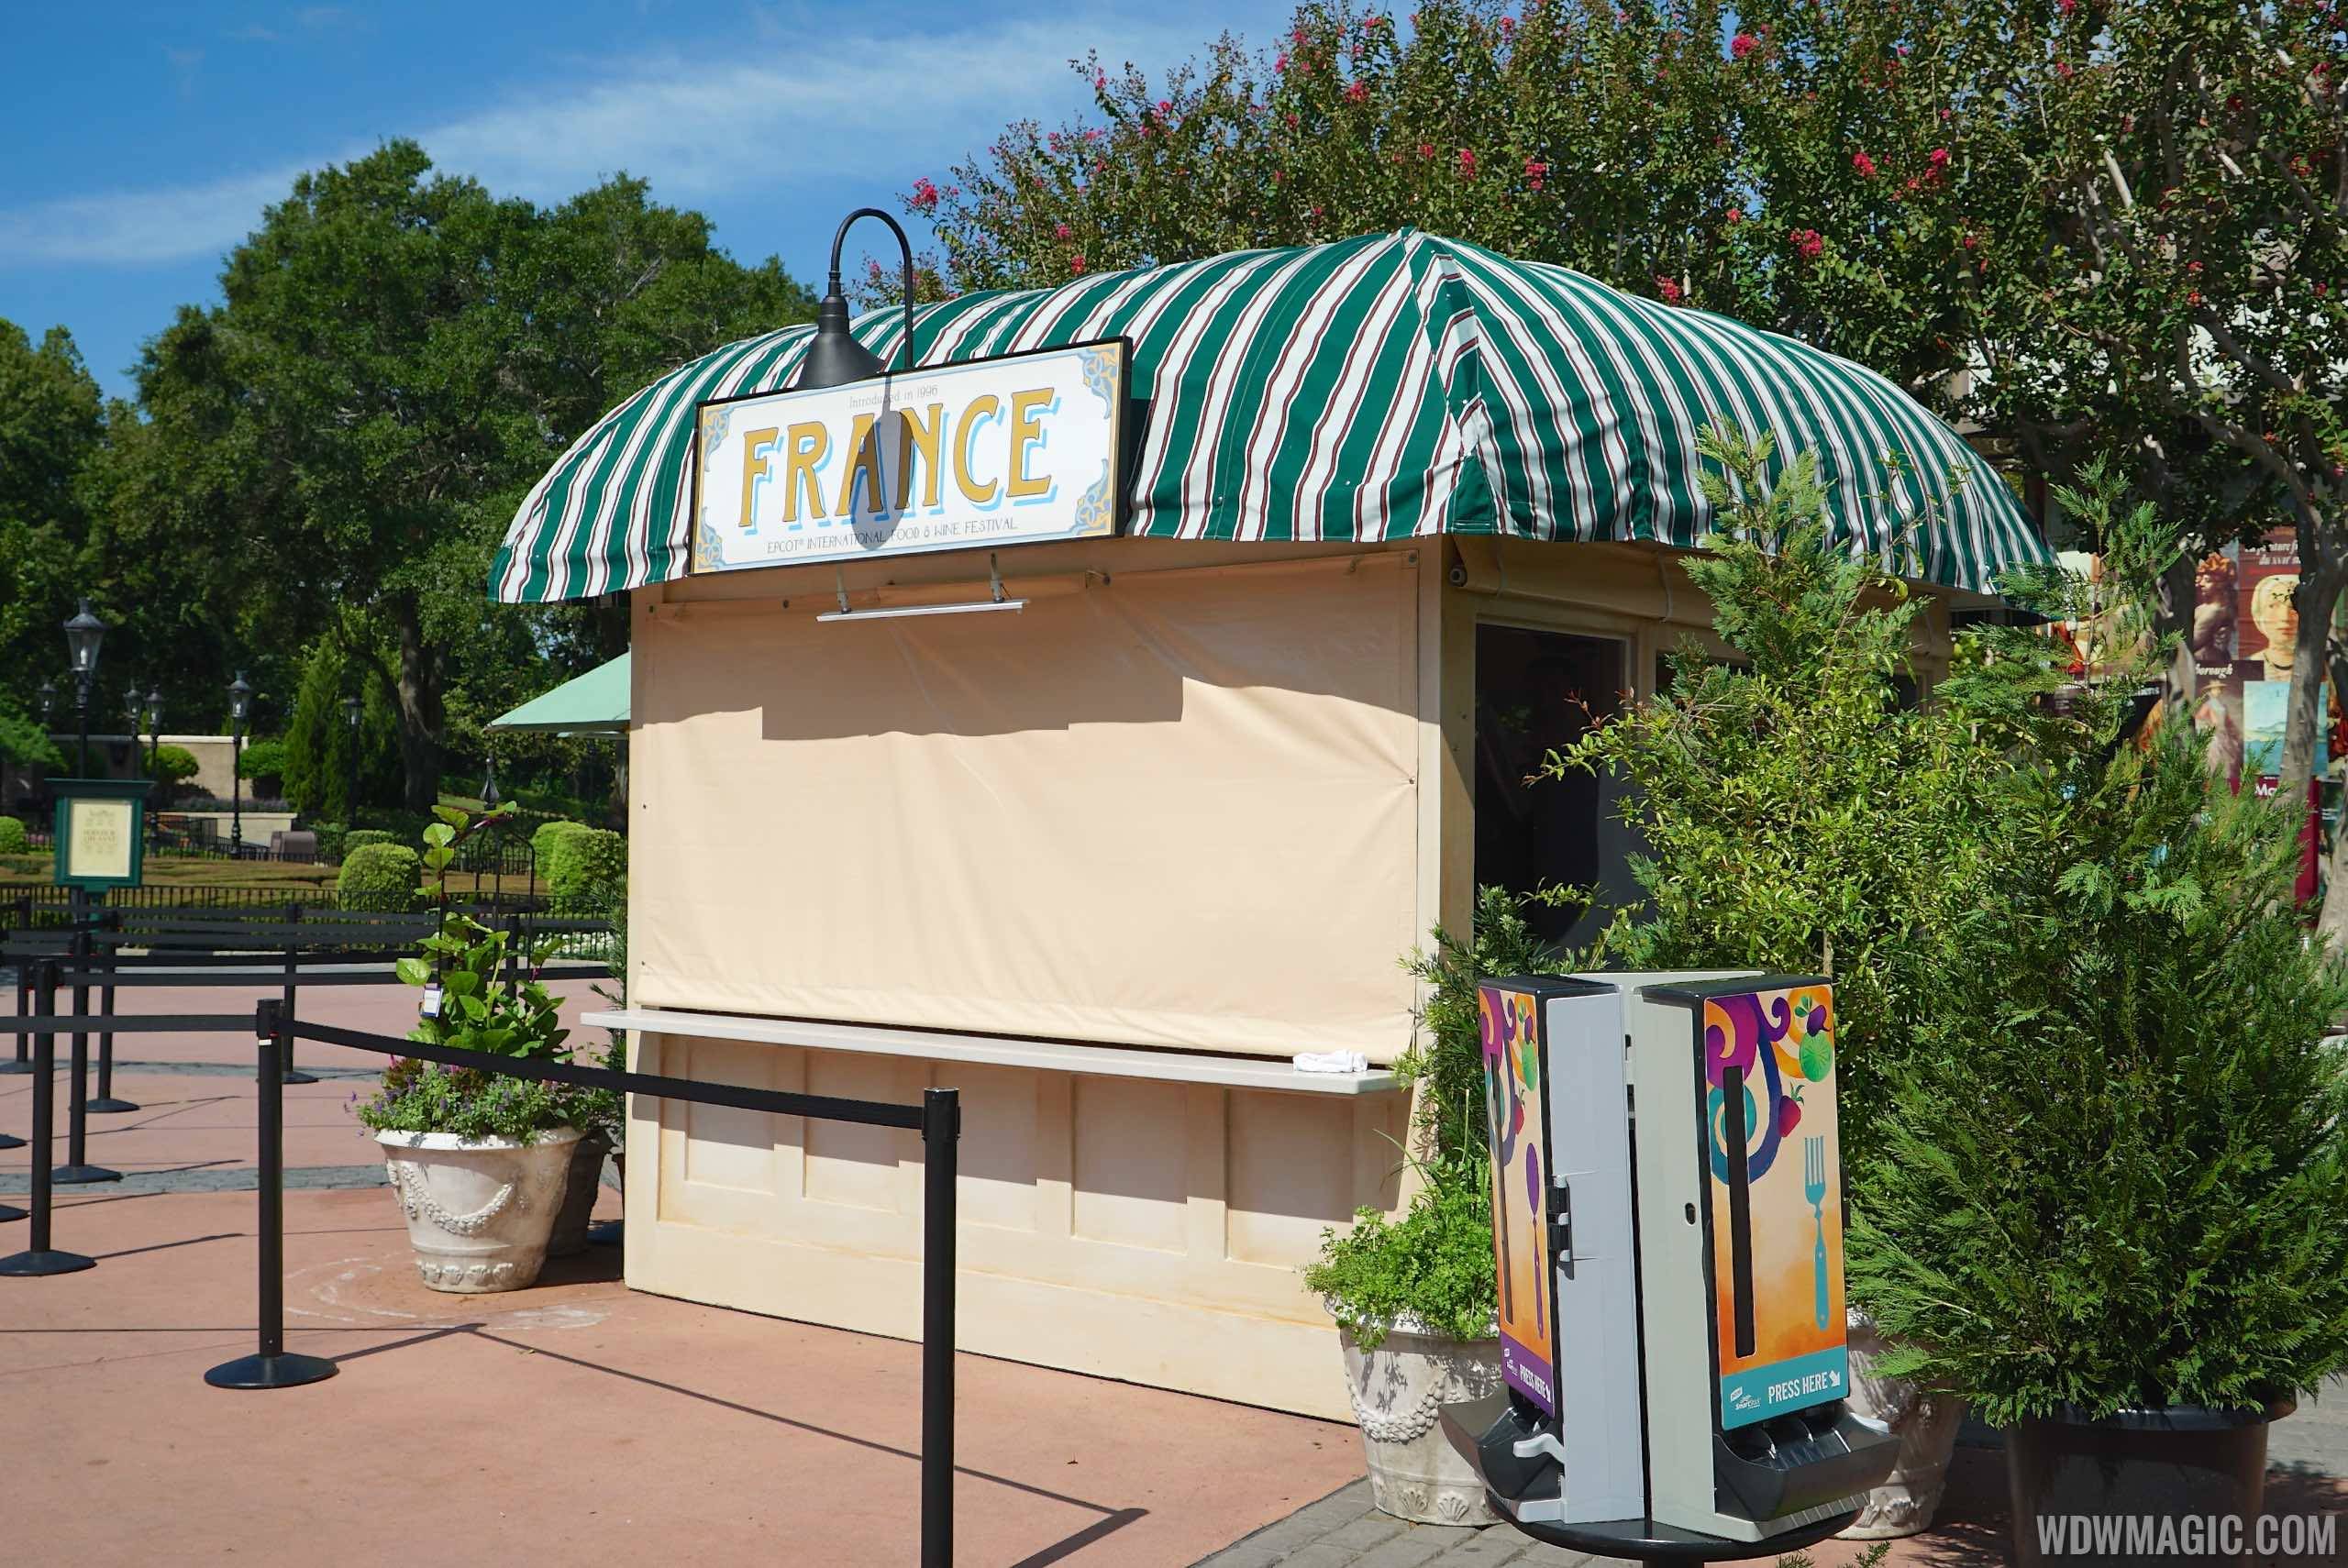 France Food and Wine kiosk (original)